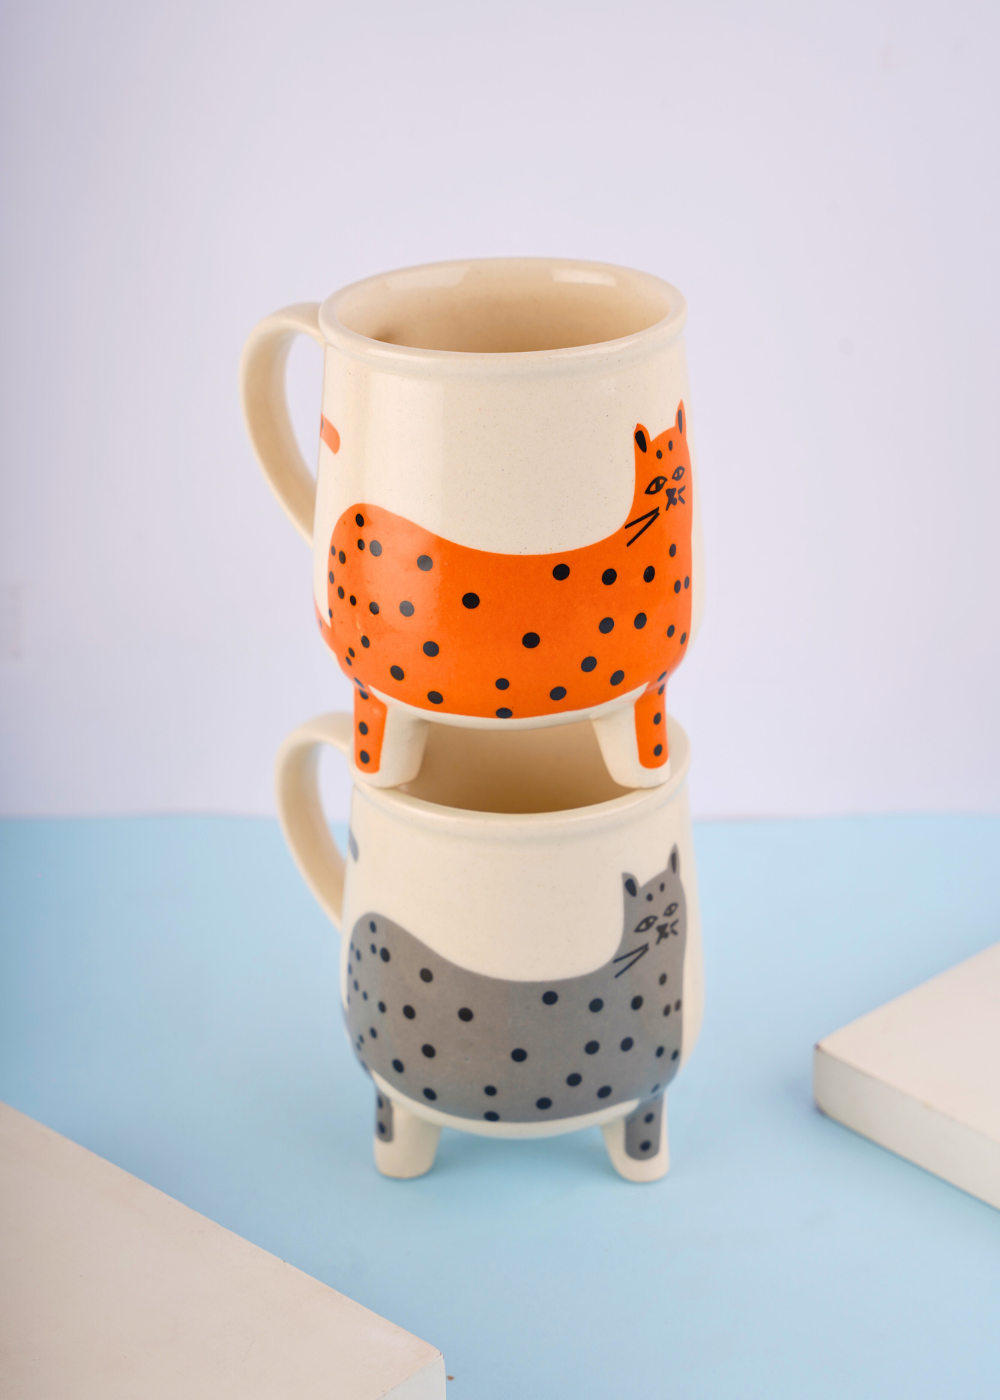 cat mugs set made by ceramic